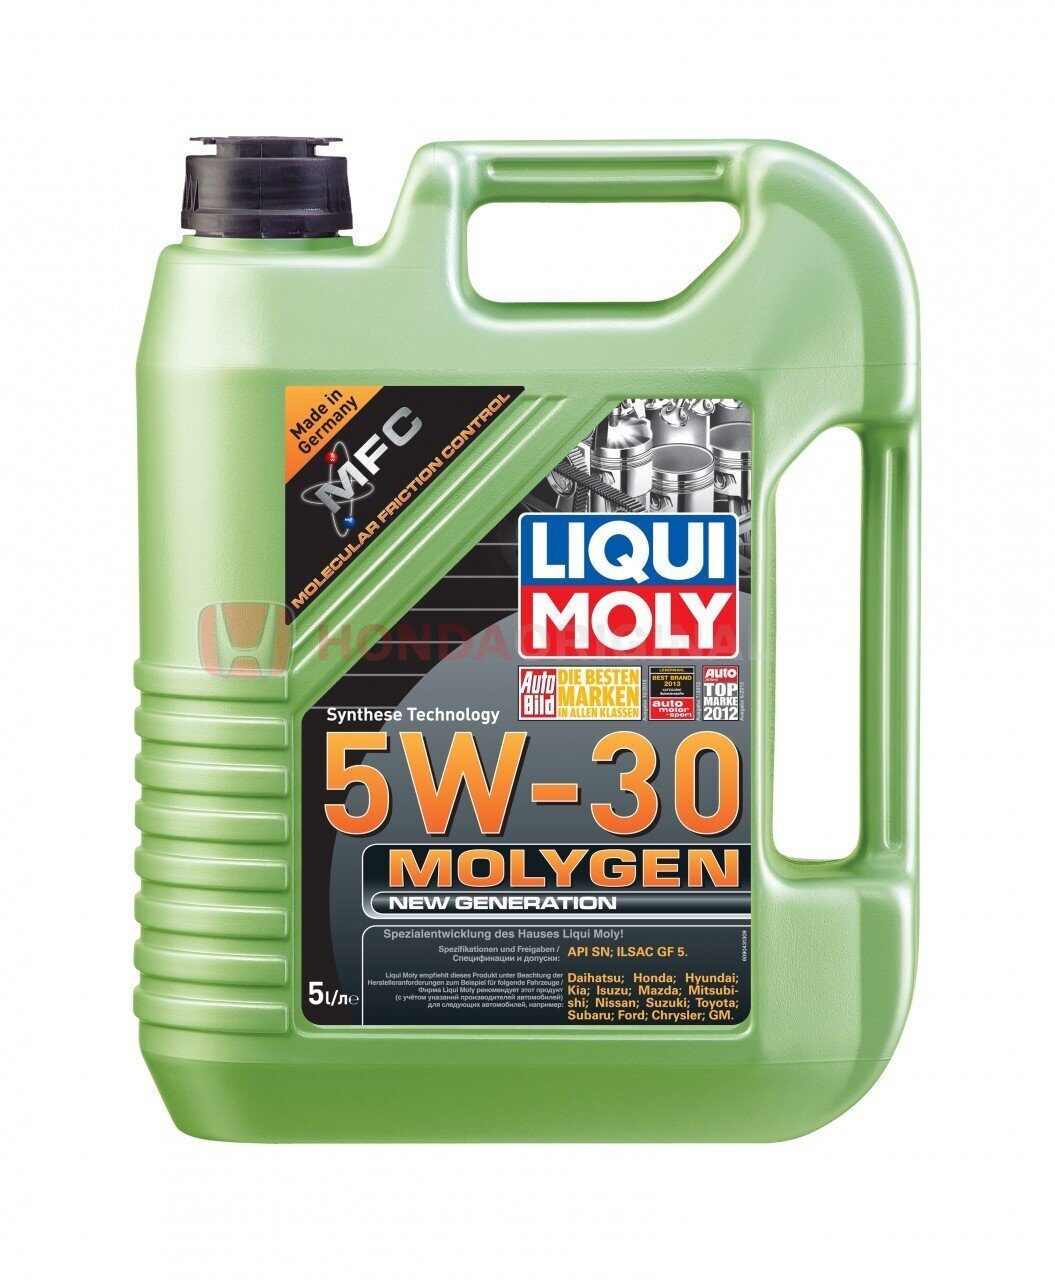 Moly моторное масло отзывы. Liqui Moly 5w40 Molygen 4л артикул. Ликви моли молиген 5w40 цвет. Molygen New Generation 5w-40. 9055 Liqui Moly.